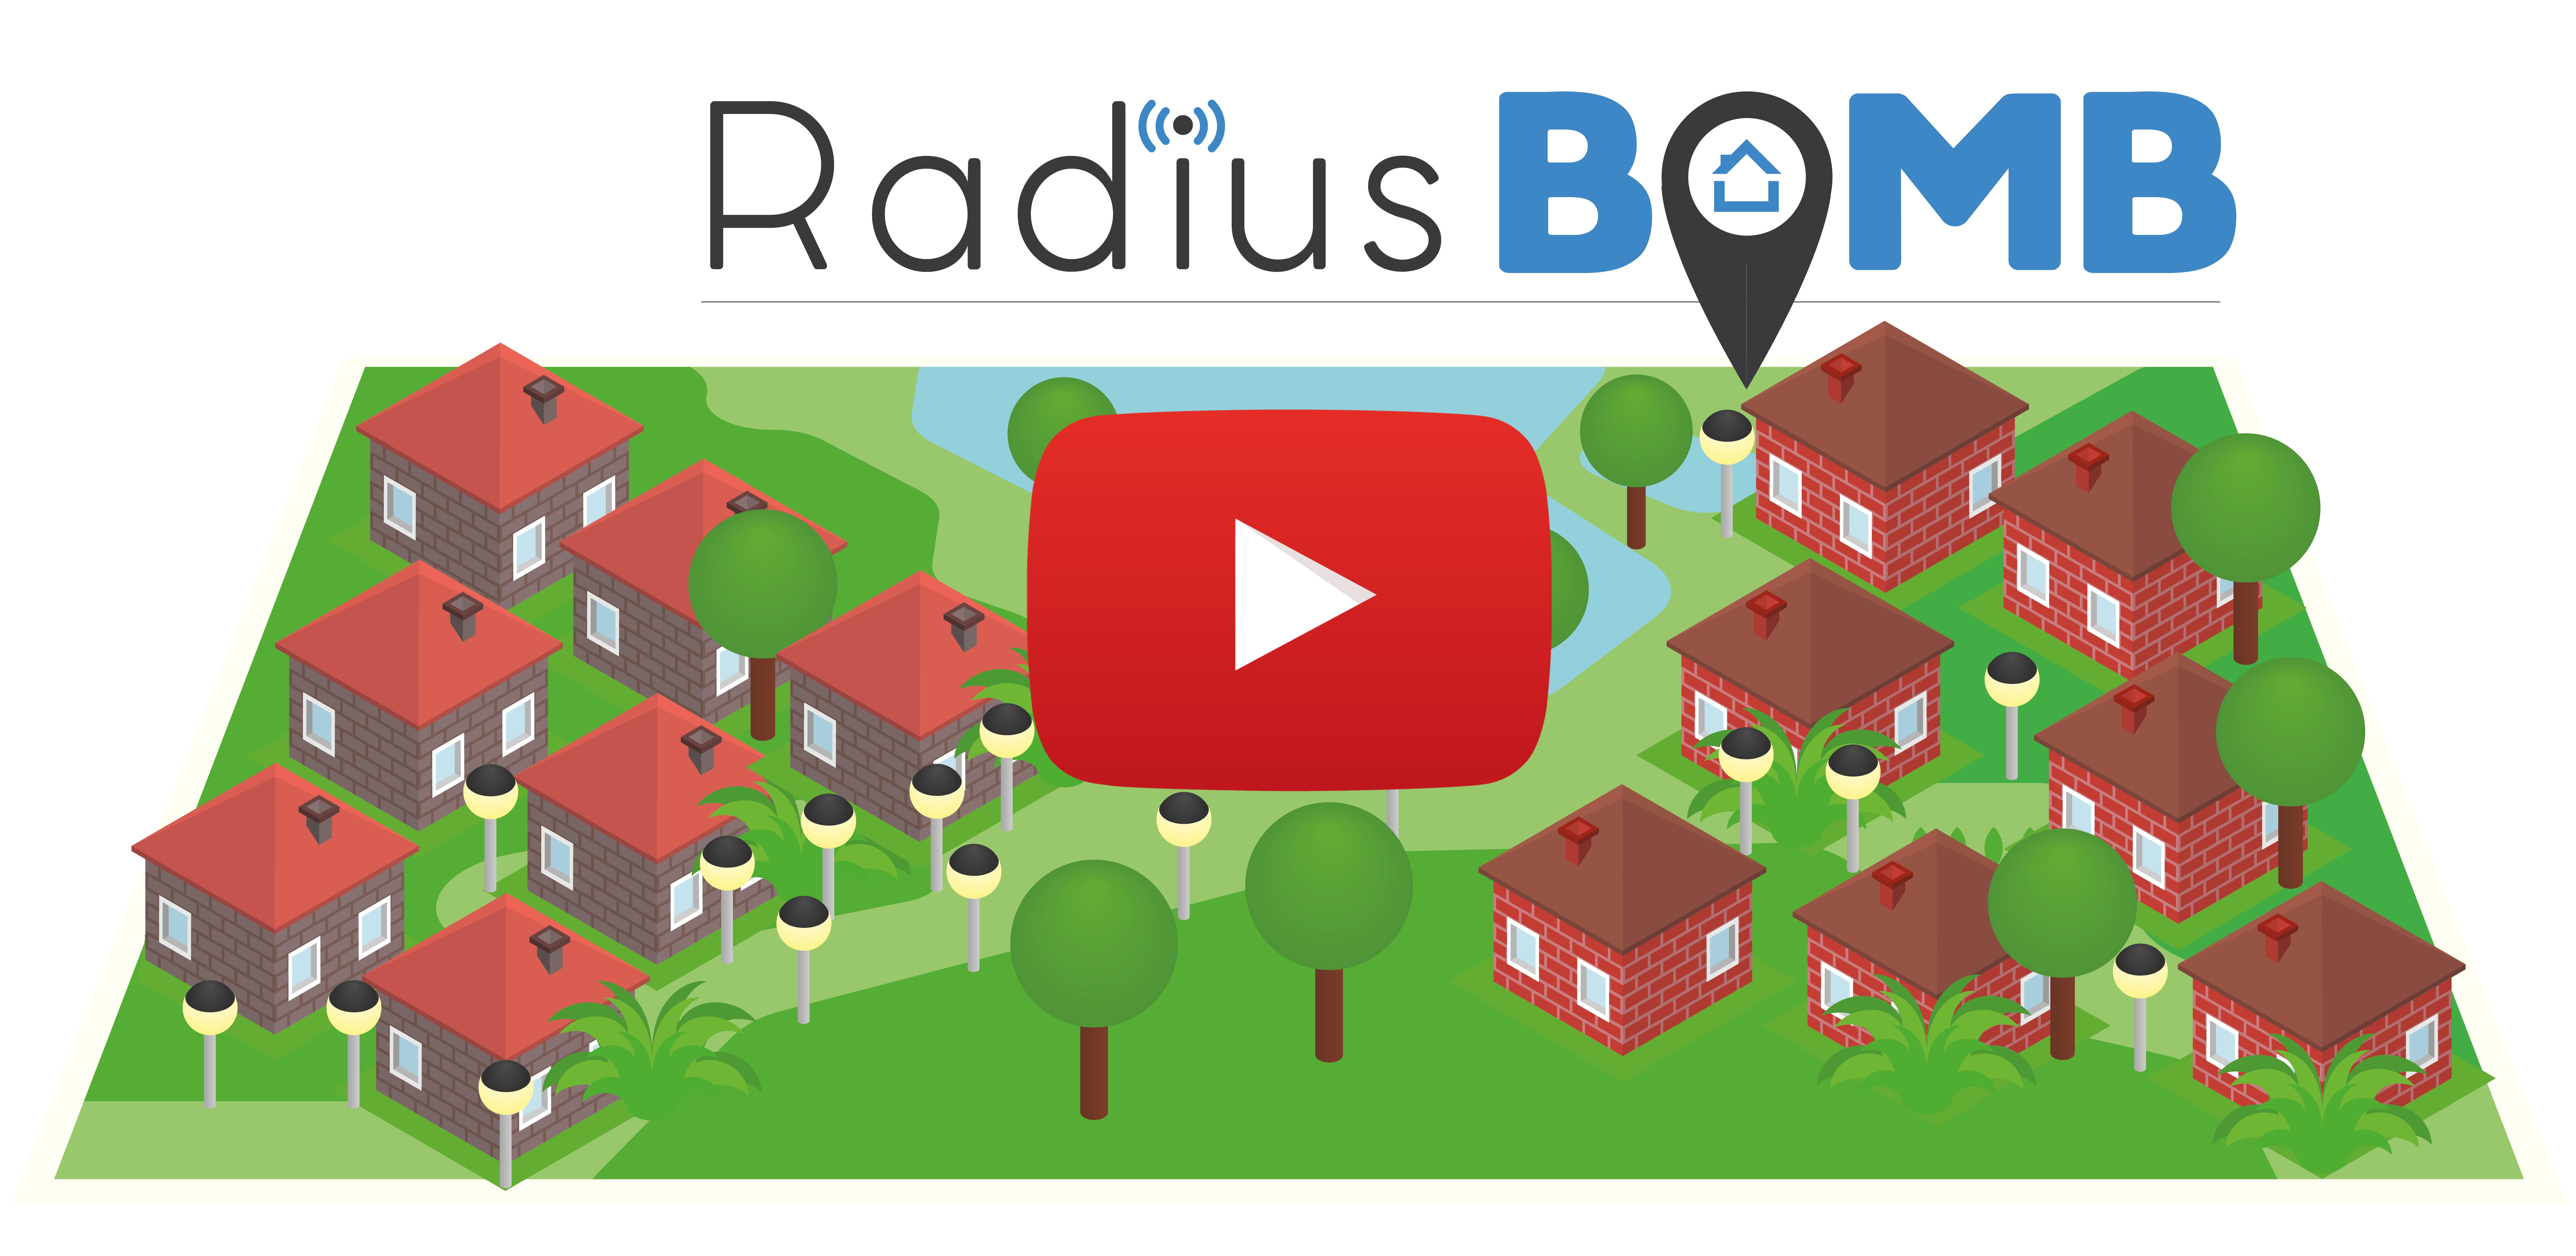 Radius Bomb Basic Explanation Video